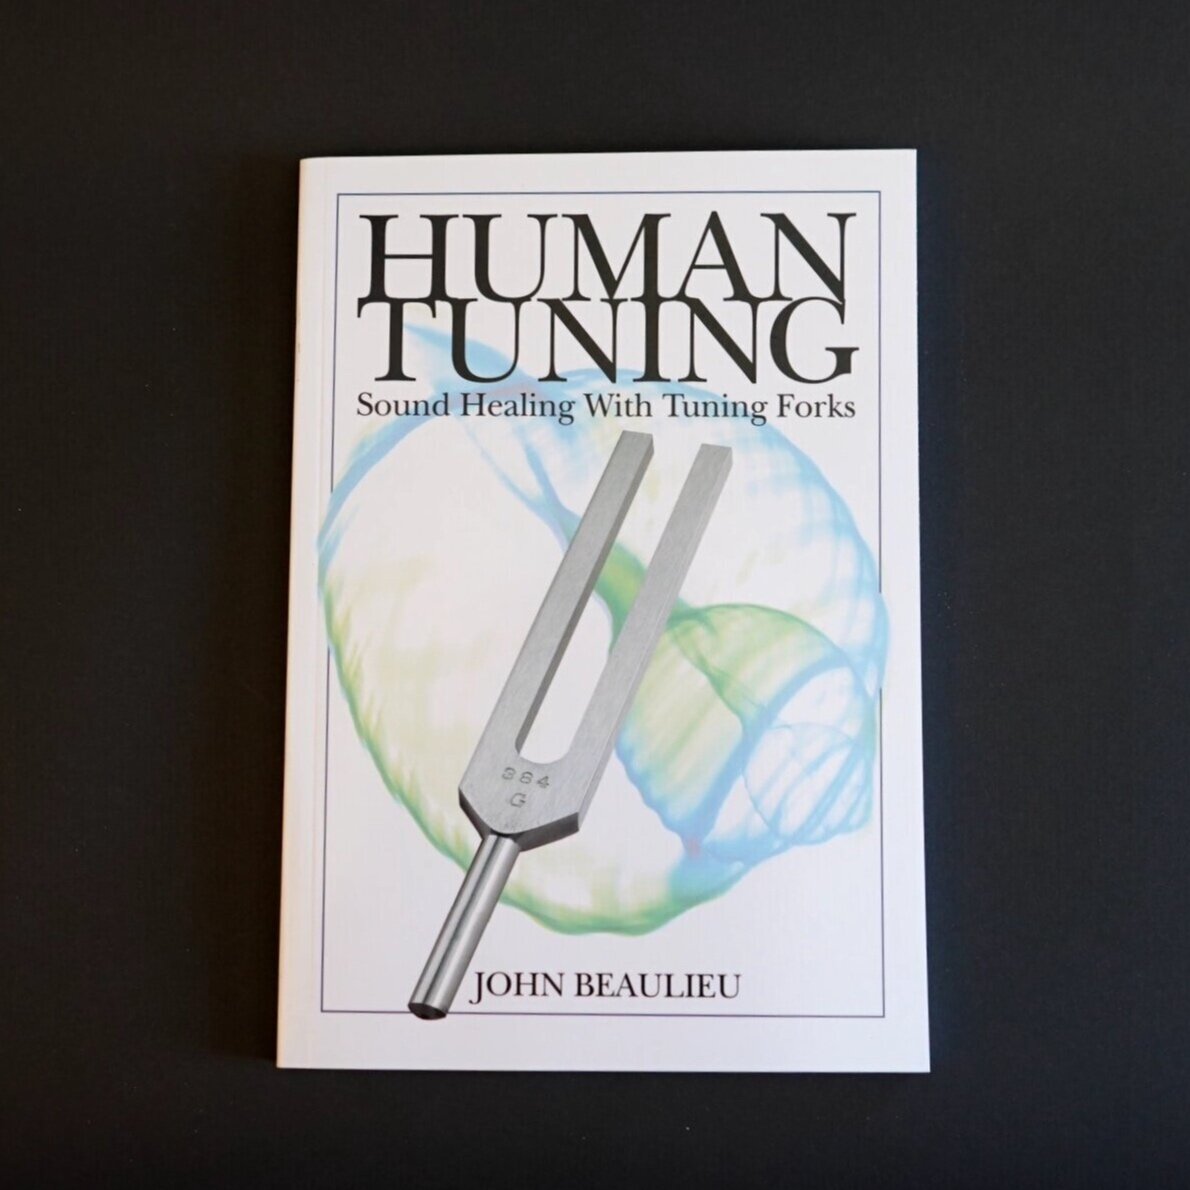 Human Tuning by Dr. John Beaulieu